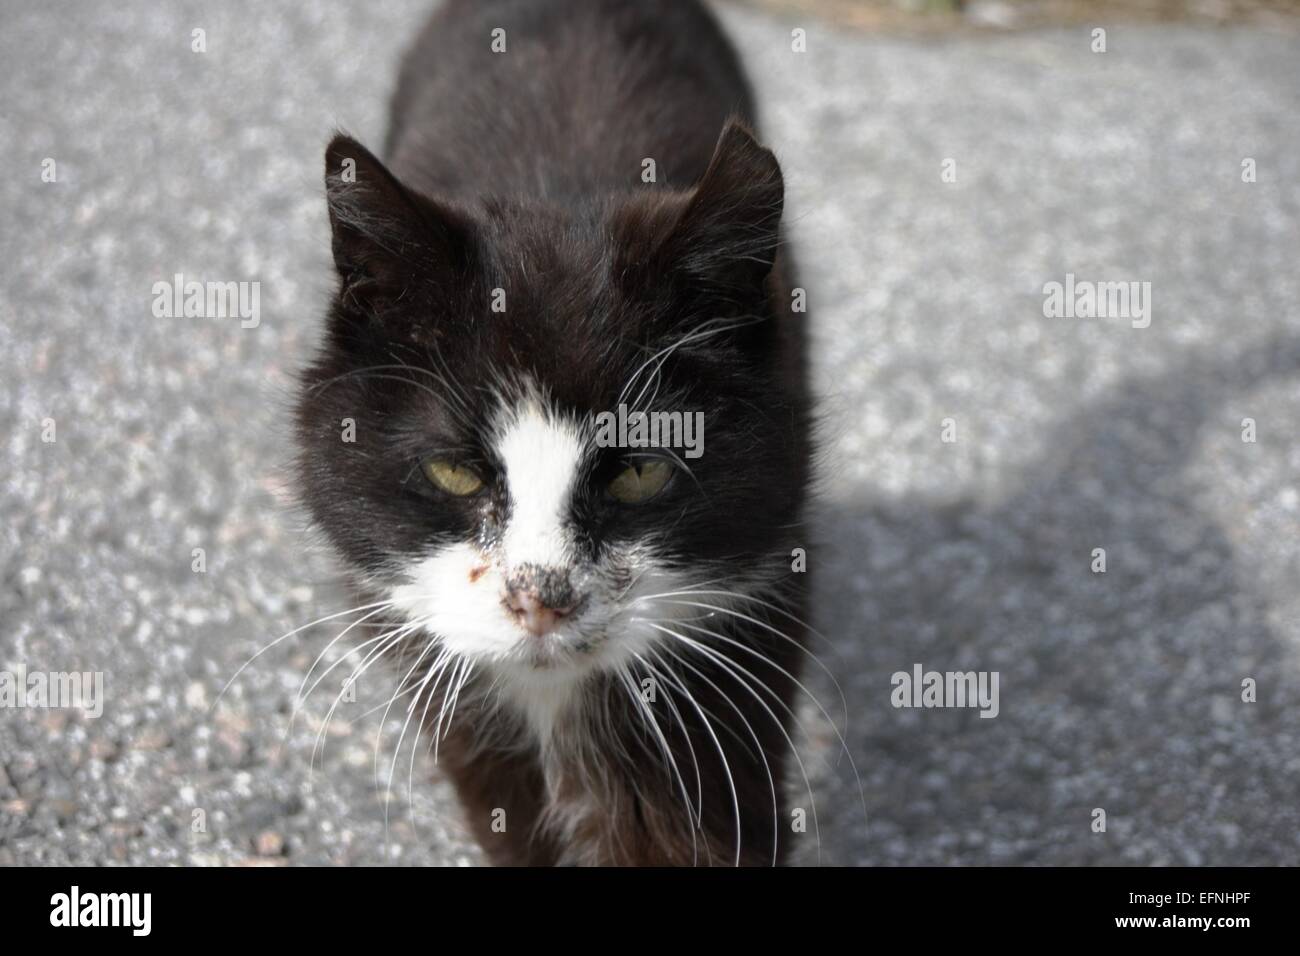 Schmutzige Nase schwarze und weiße Katze Stockfotografie - Alamy